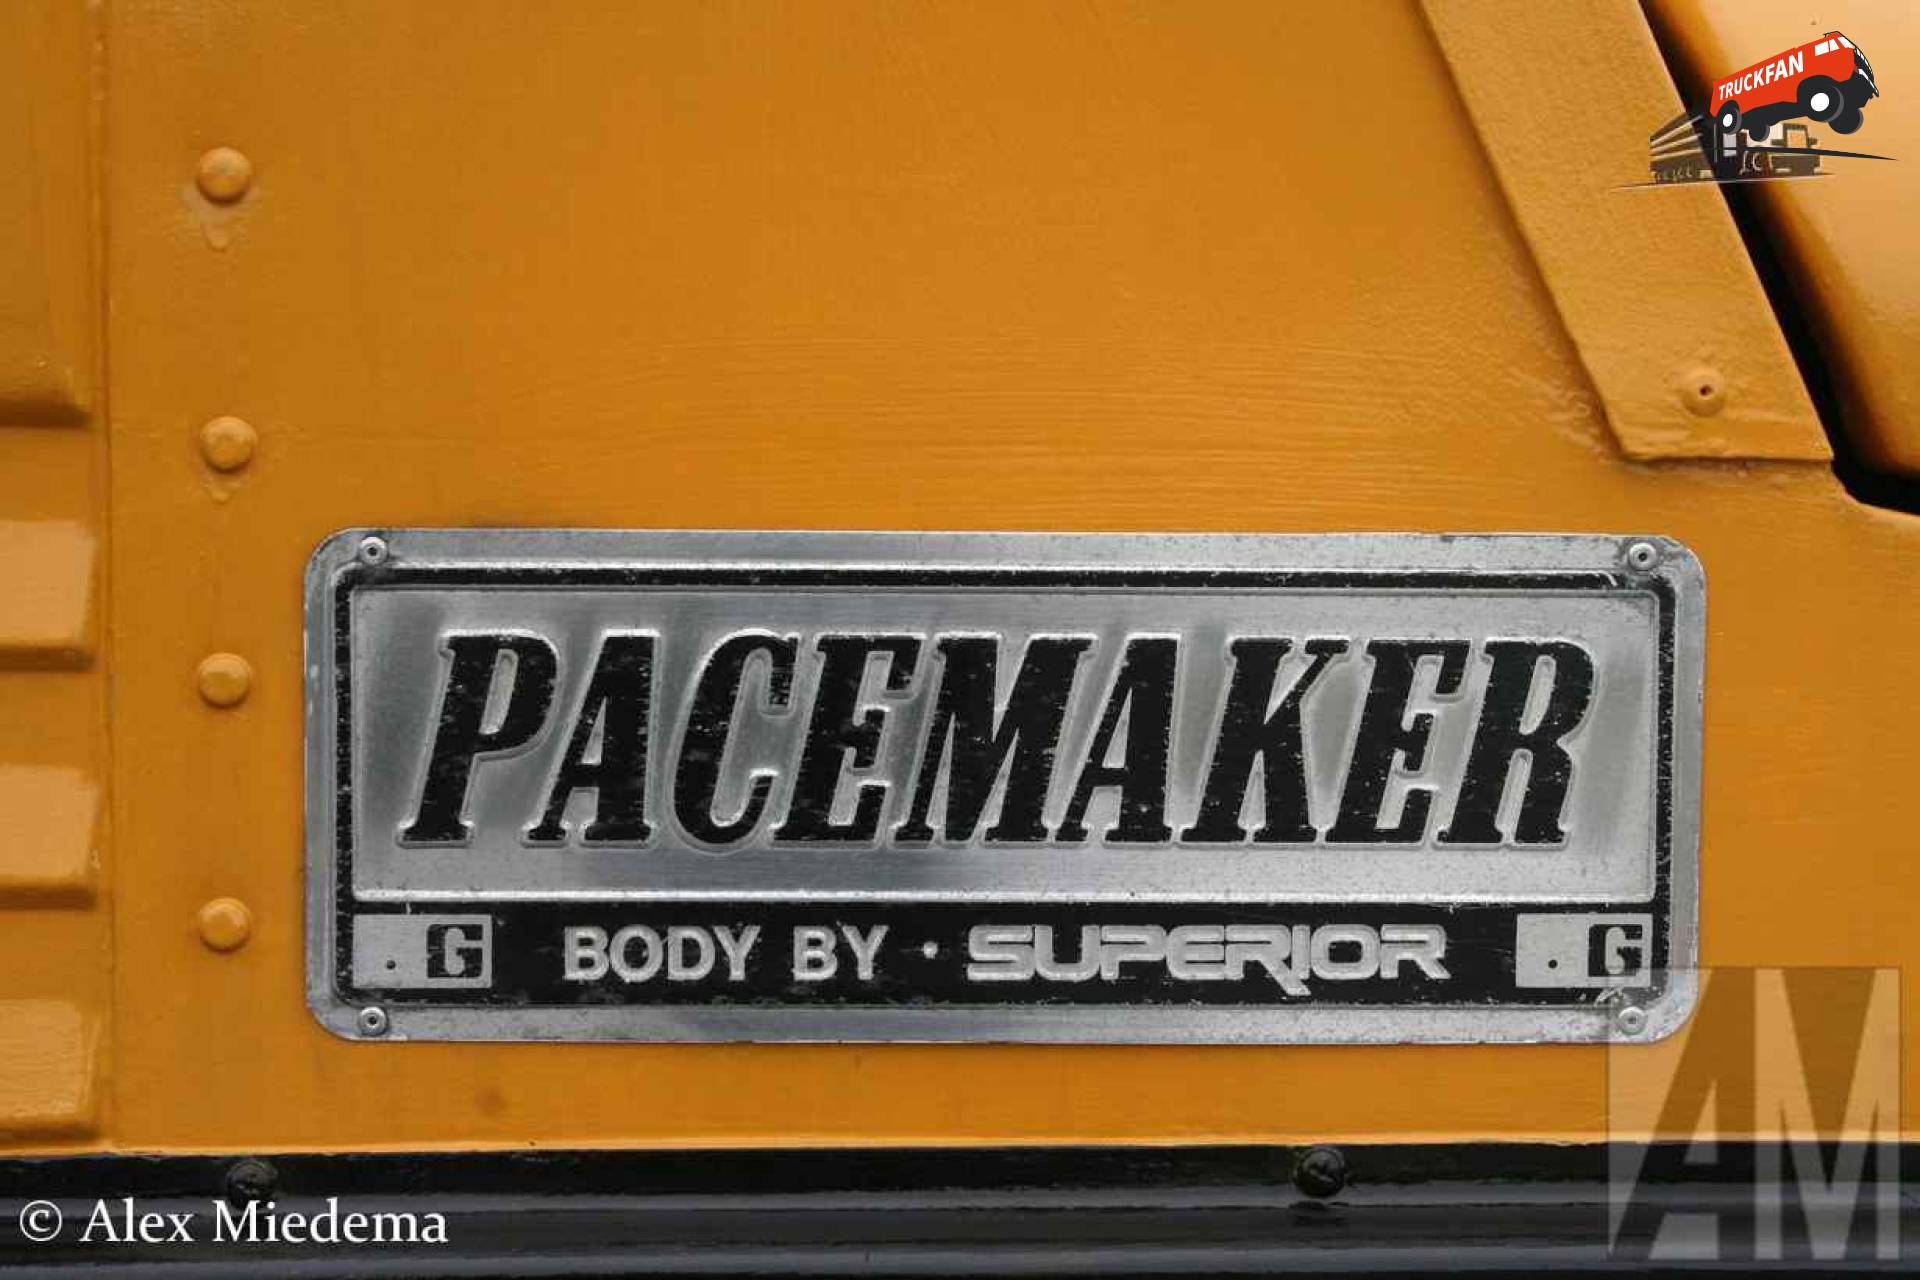 GMC Pacemaker